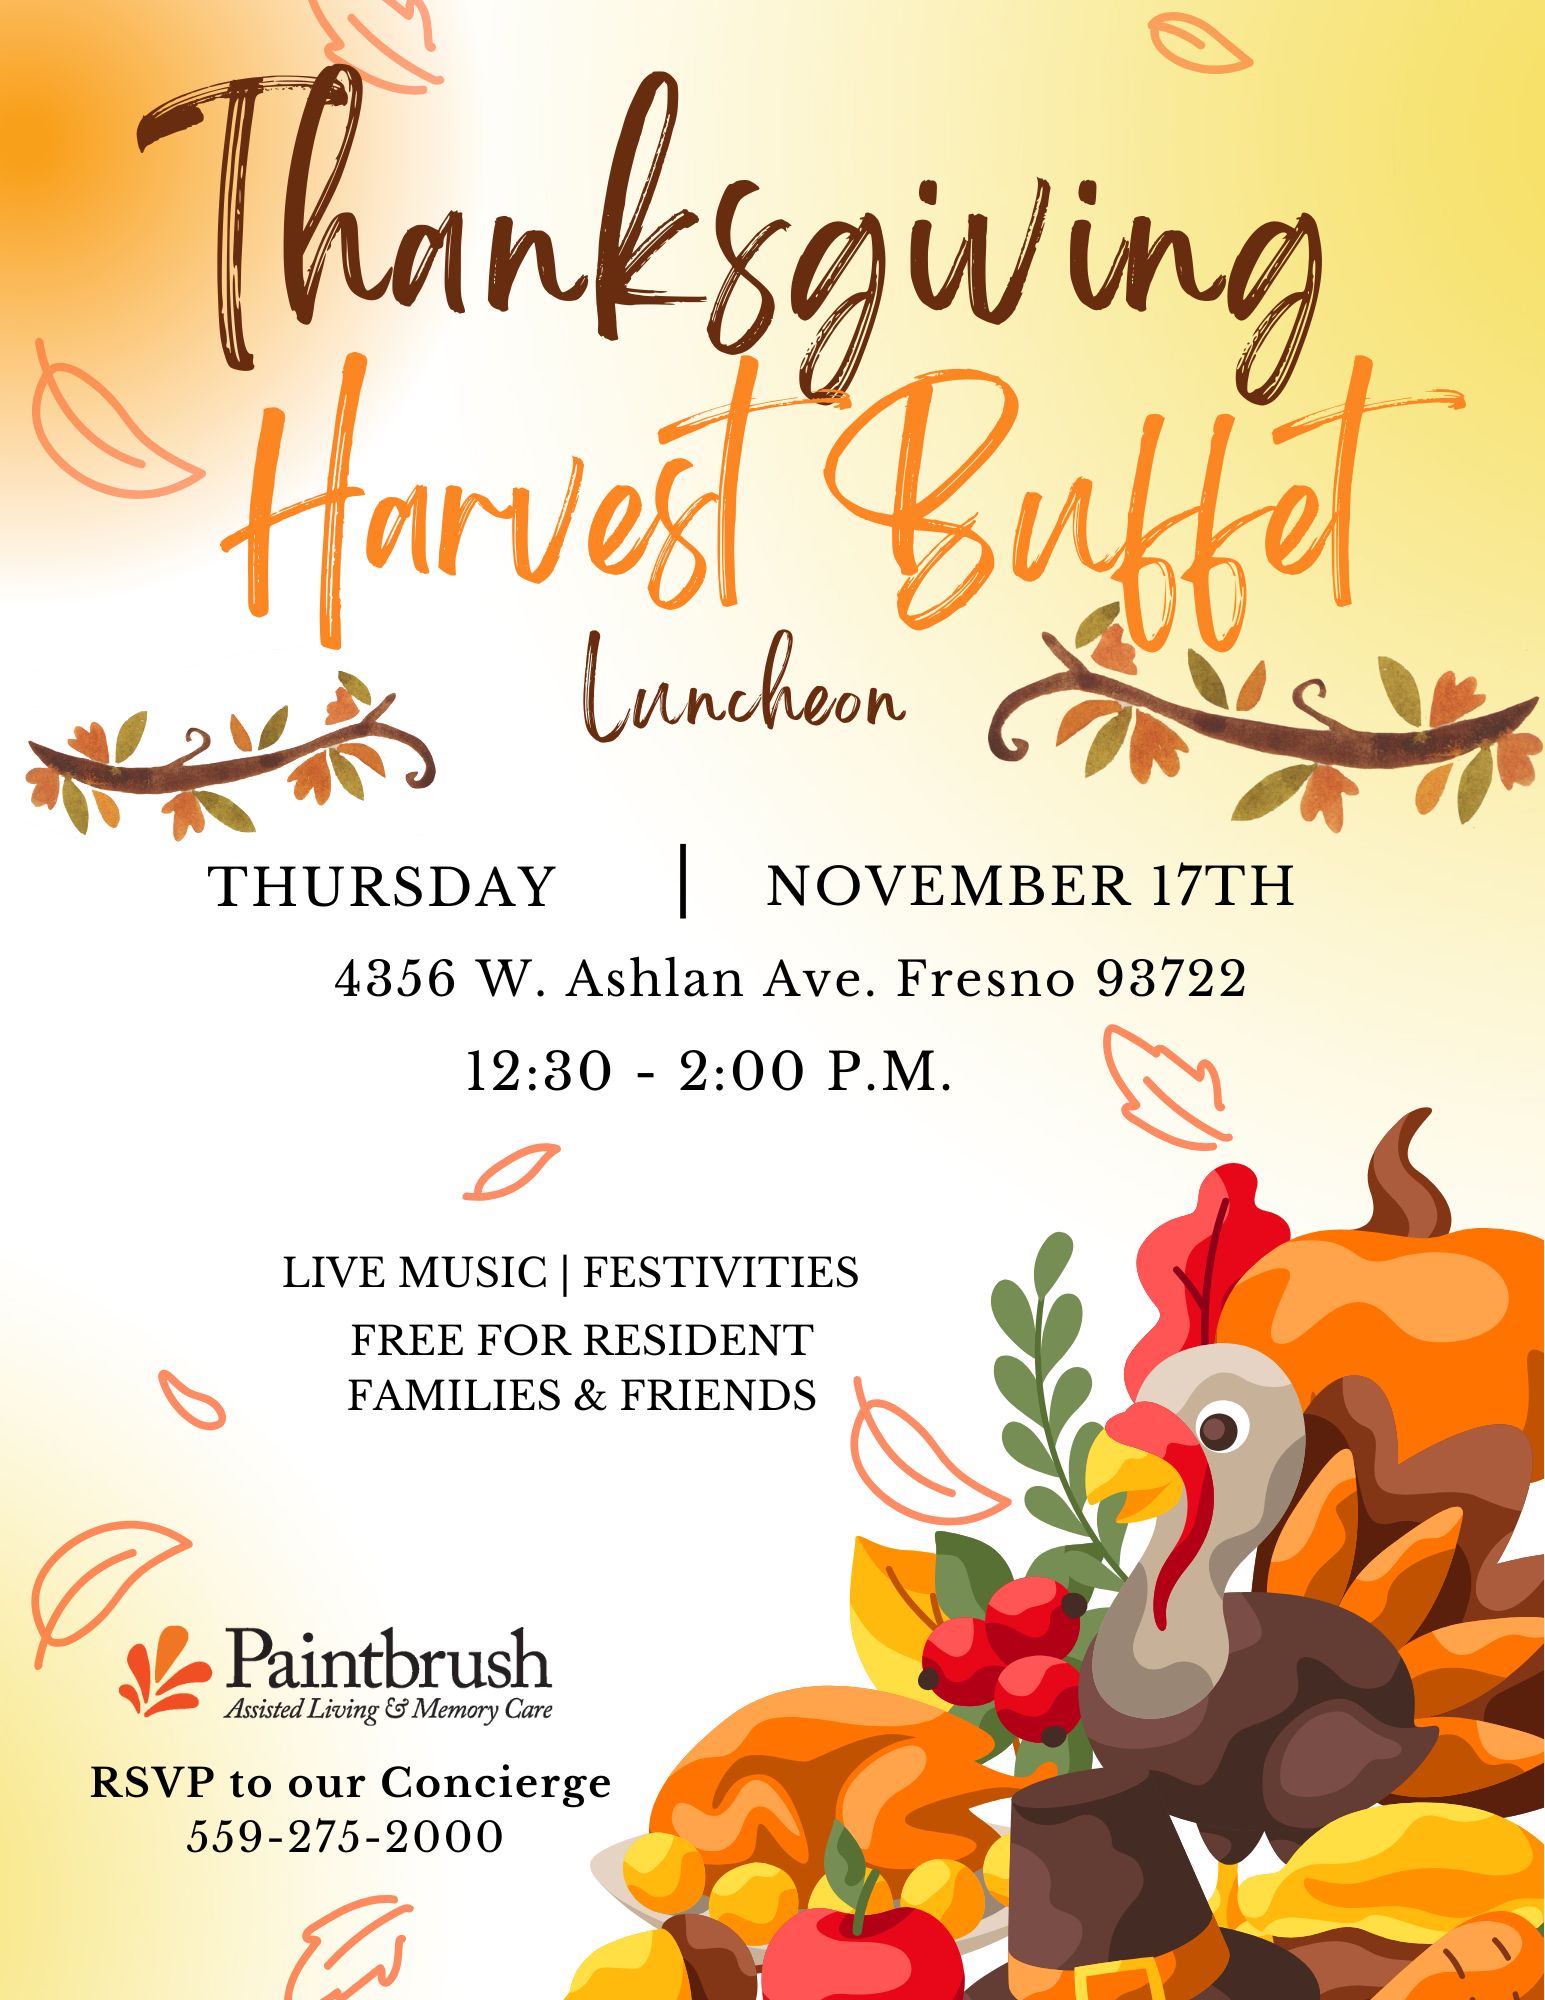 Harvest Buffet Thanksgiving Luncheon Event